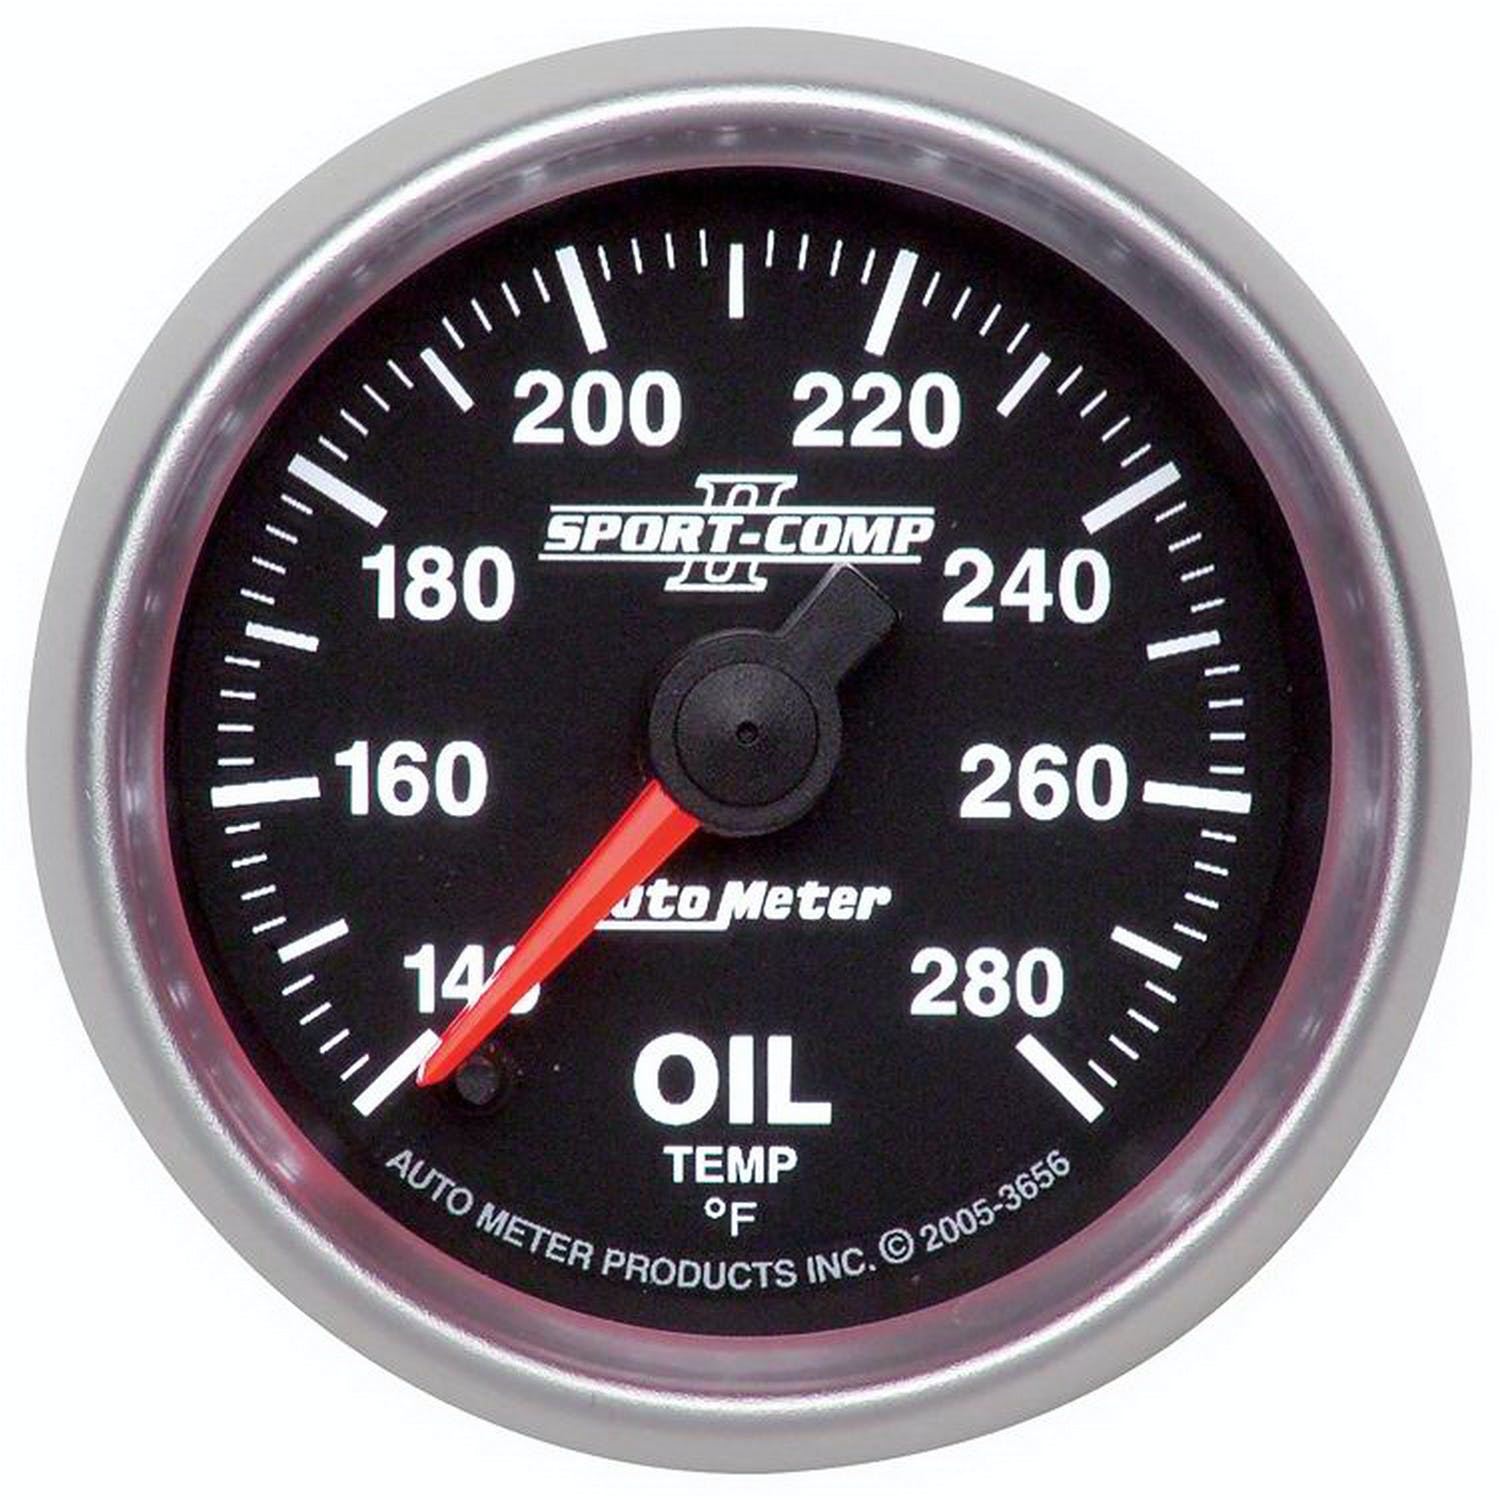 AutoMeter Products 3656 Oil Temp Gauge, 2 1/16, 140-280° F, Digital Stepper Motor, Sport-Comp II